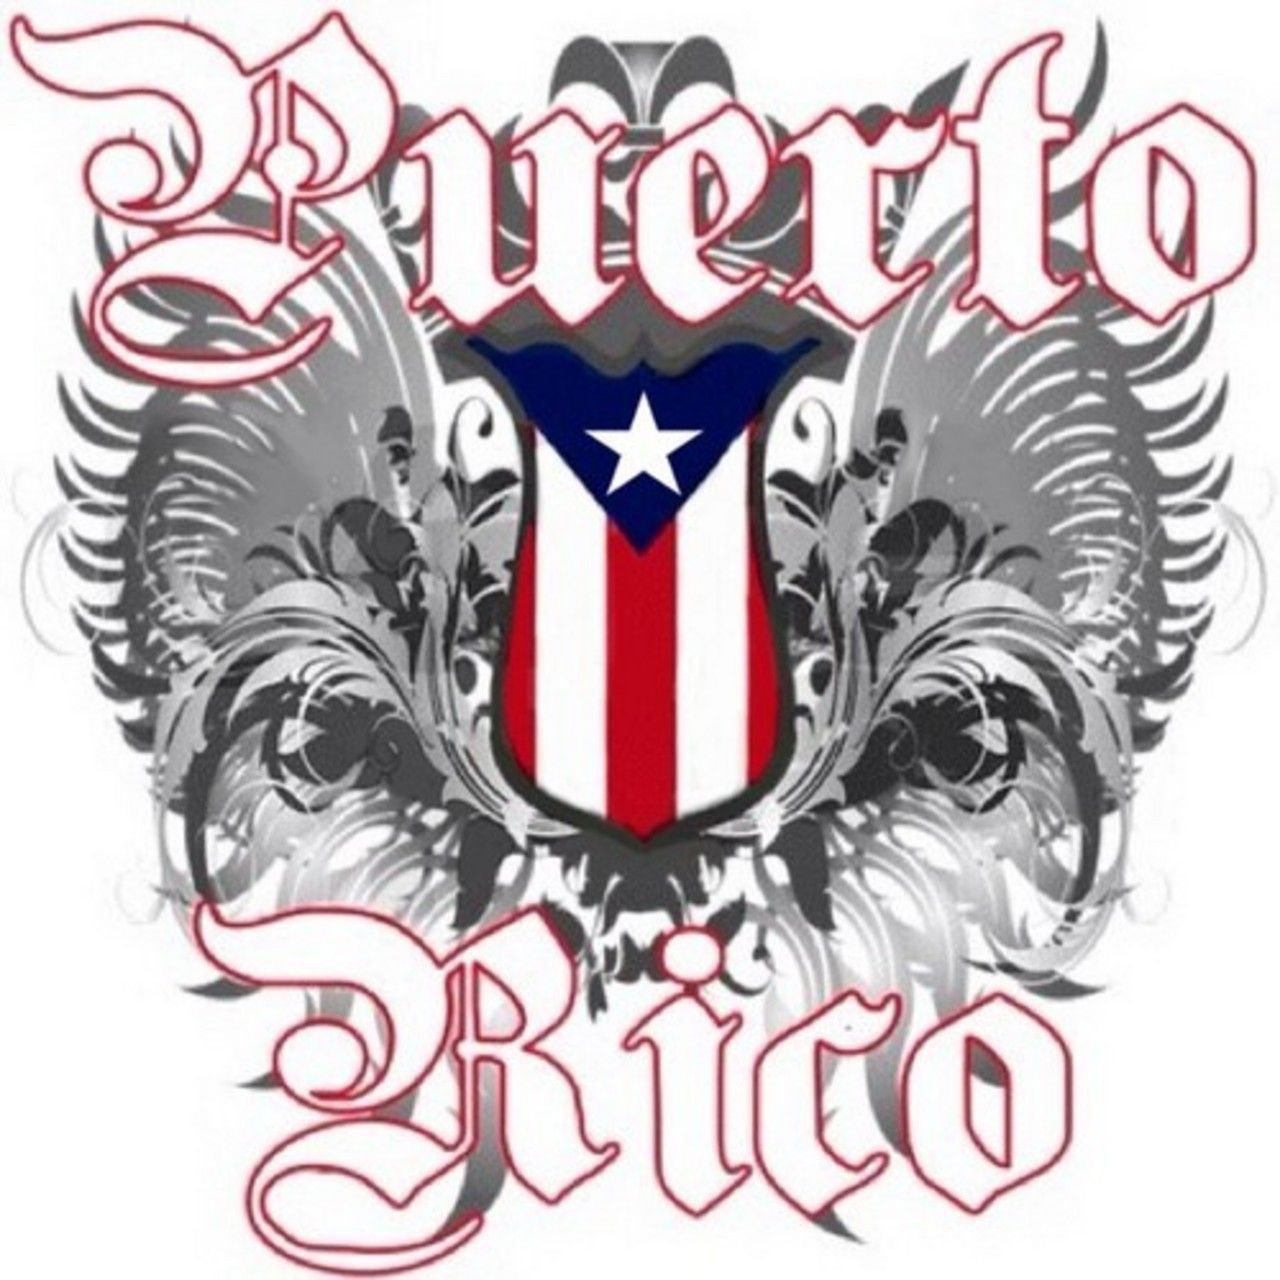 Free I love Puerto Rico phone wallpaper by jessrios80